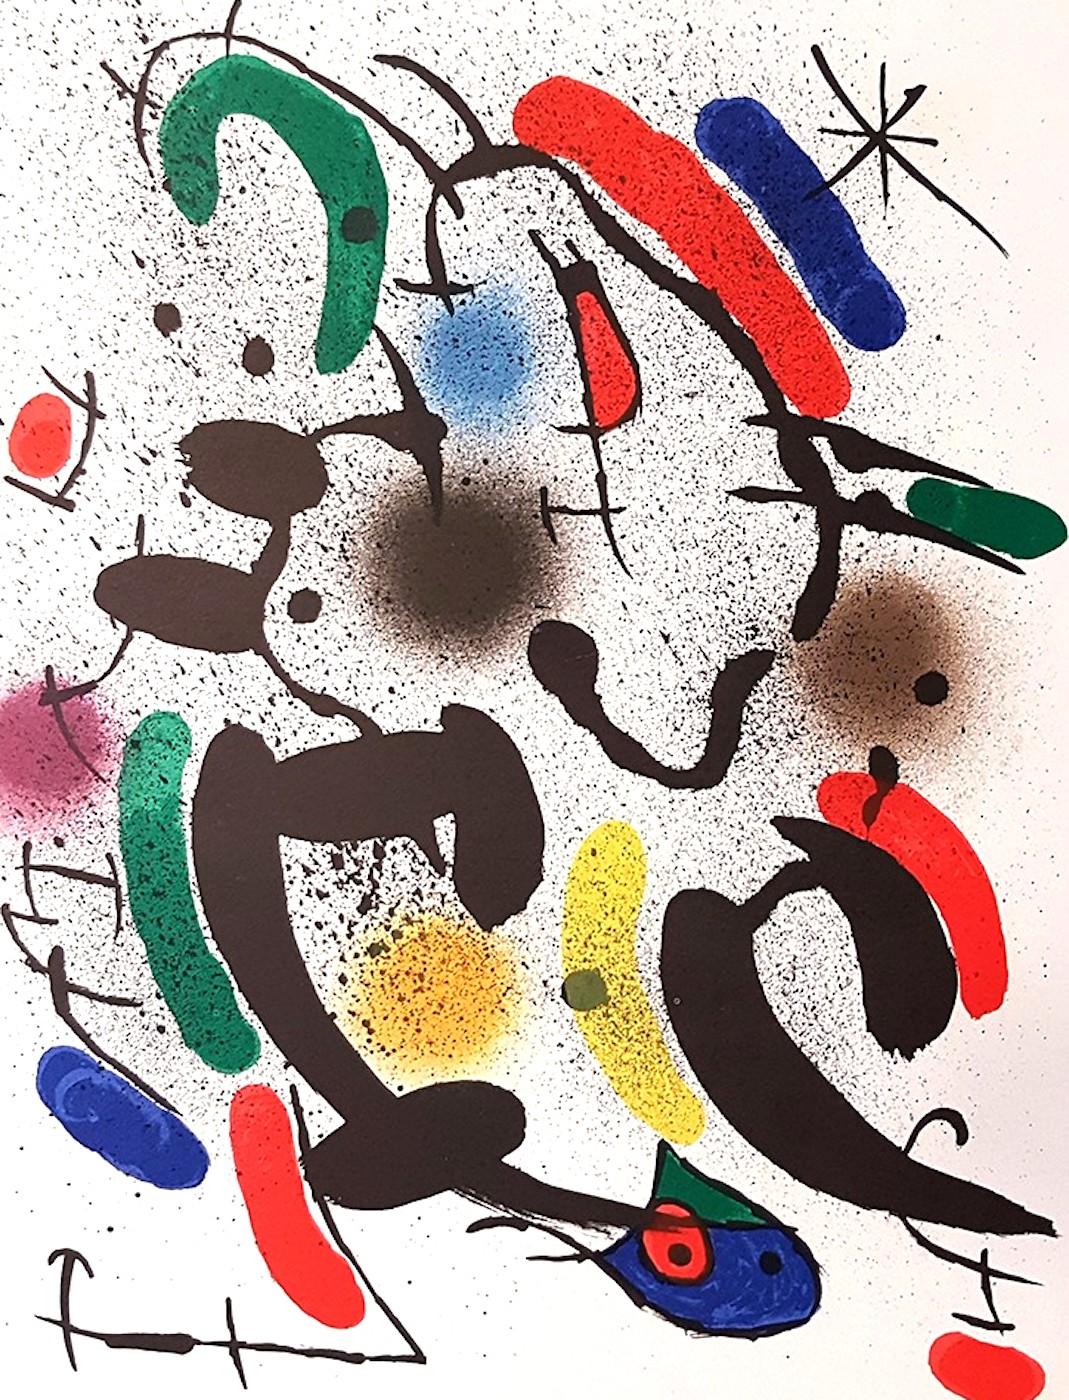  Mirò Lithographe I - Plate VI - Original Lithograph by Joan Mirò - 1972 - Print by Joan Miró